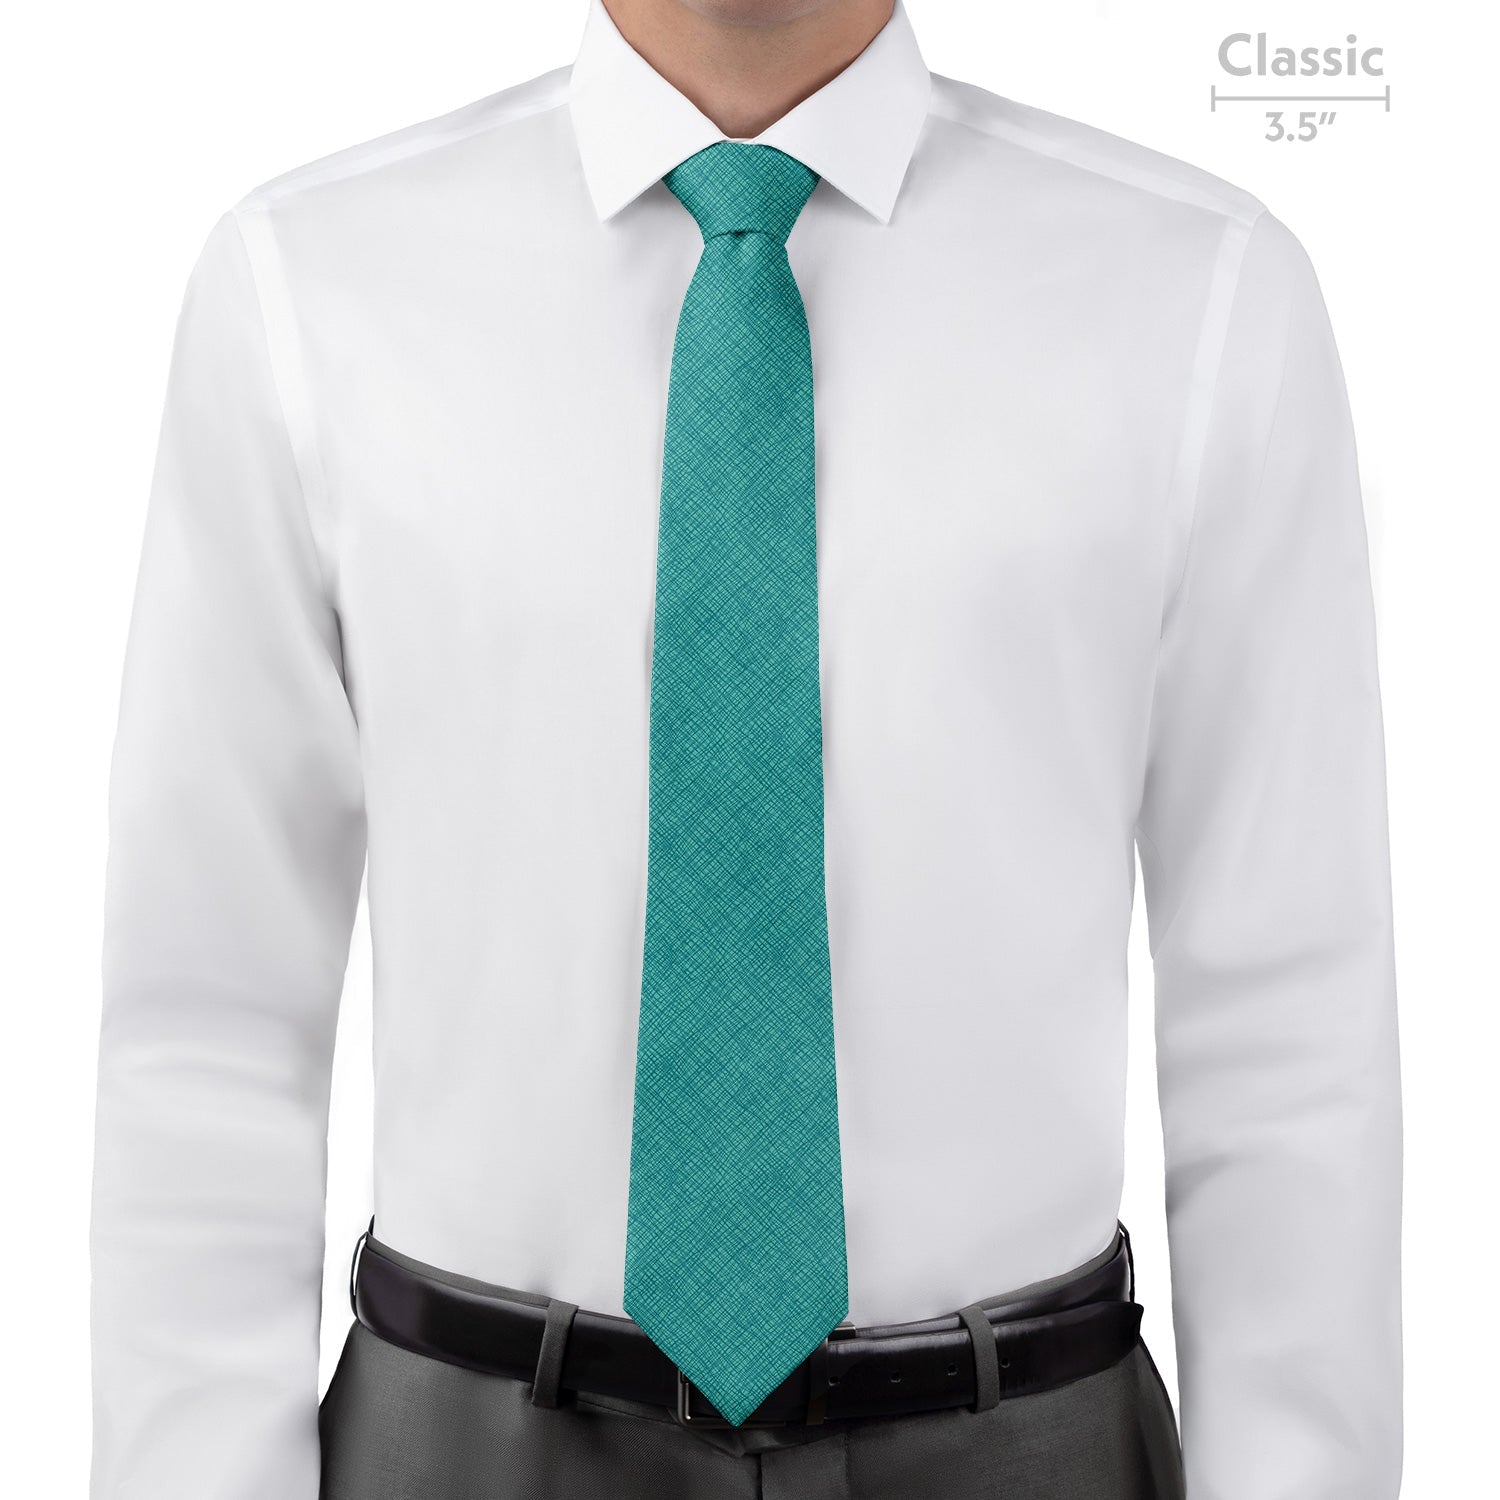 Burlap Crosshatch Necktie - Classic - Knotty Tie Co.